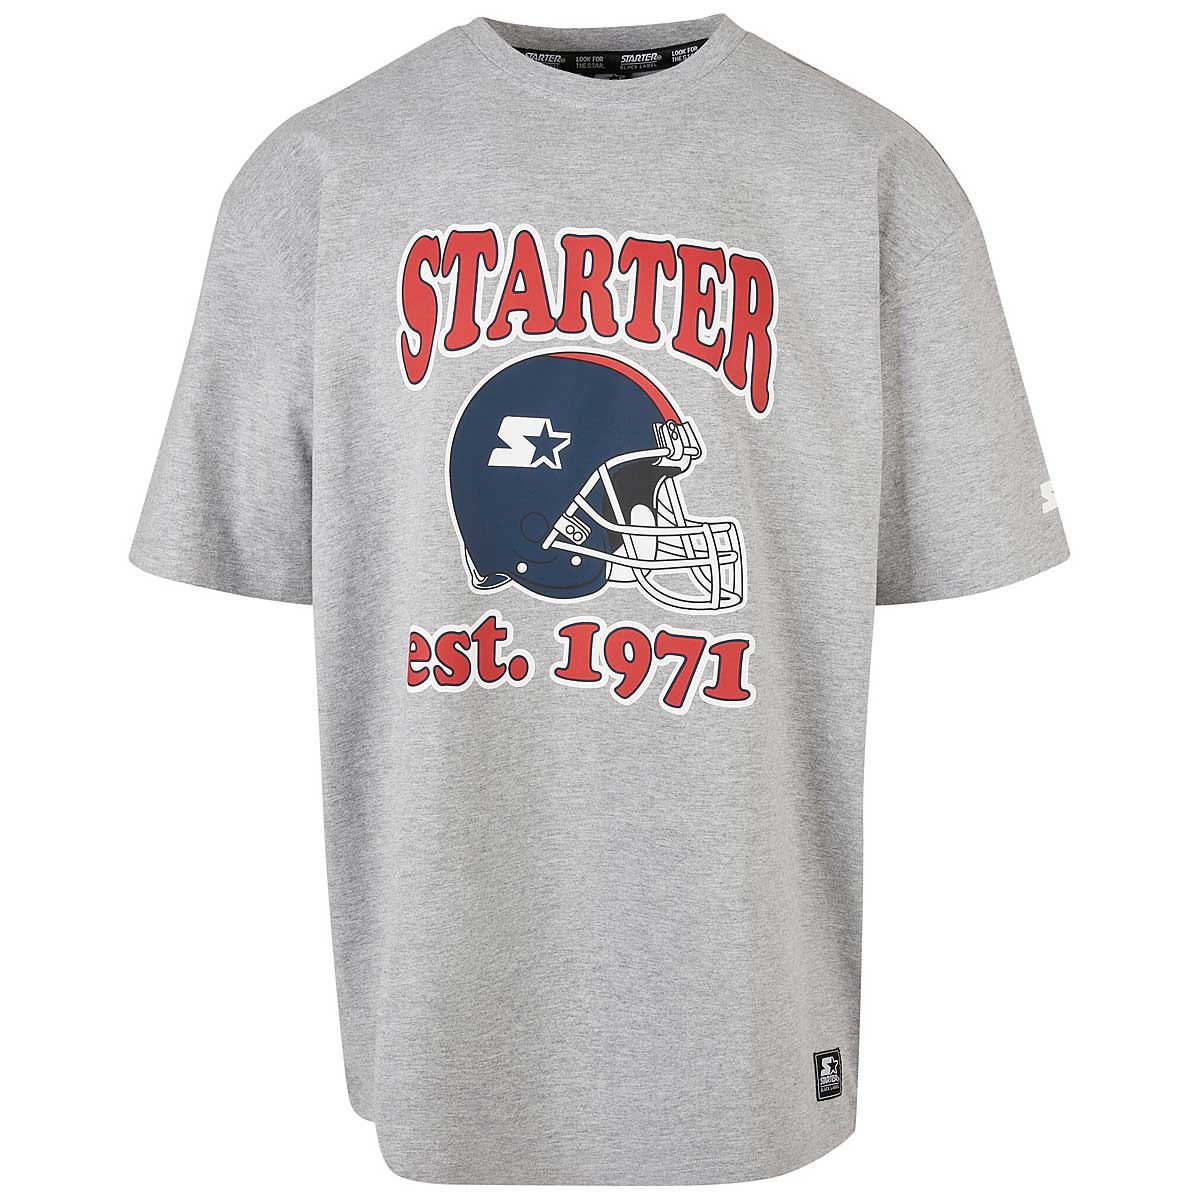 Starter Football T-Shirt, Heathergrey